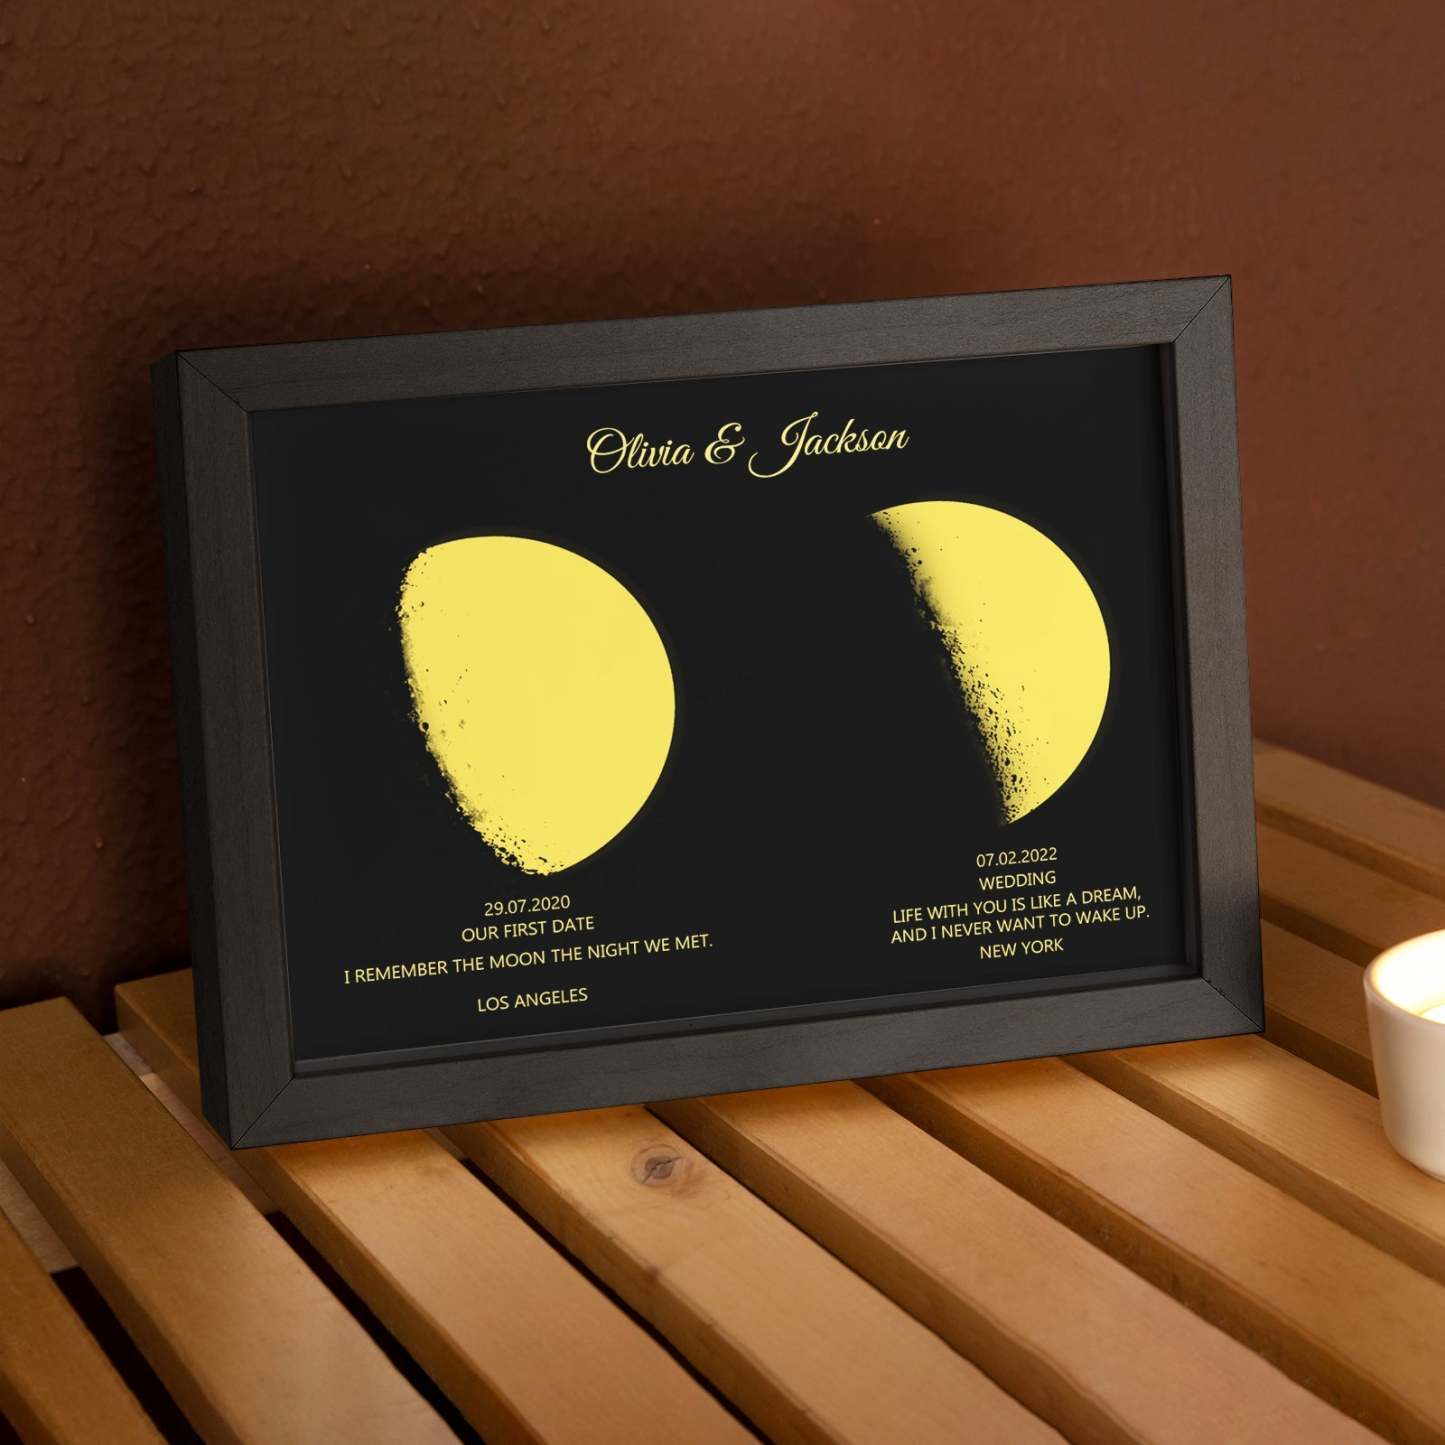 Aangepaste Maanfase En Namen Houten Frame Met Gepersonaliseerde Tekst Gold Moon - SokkenFoto